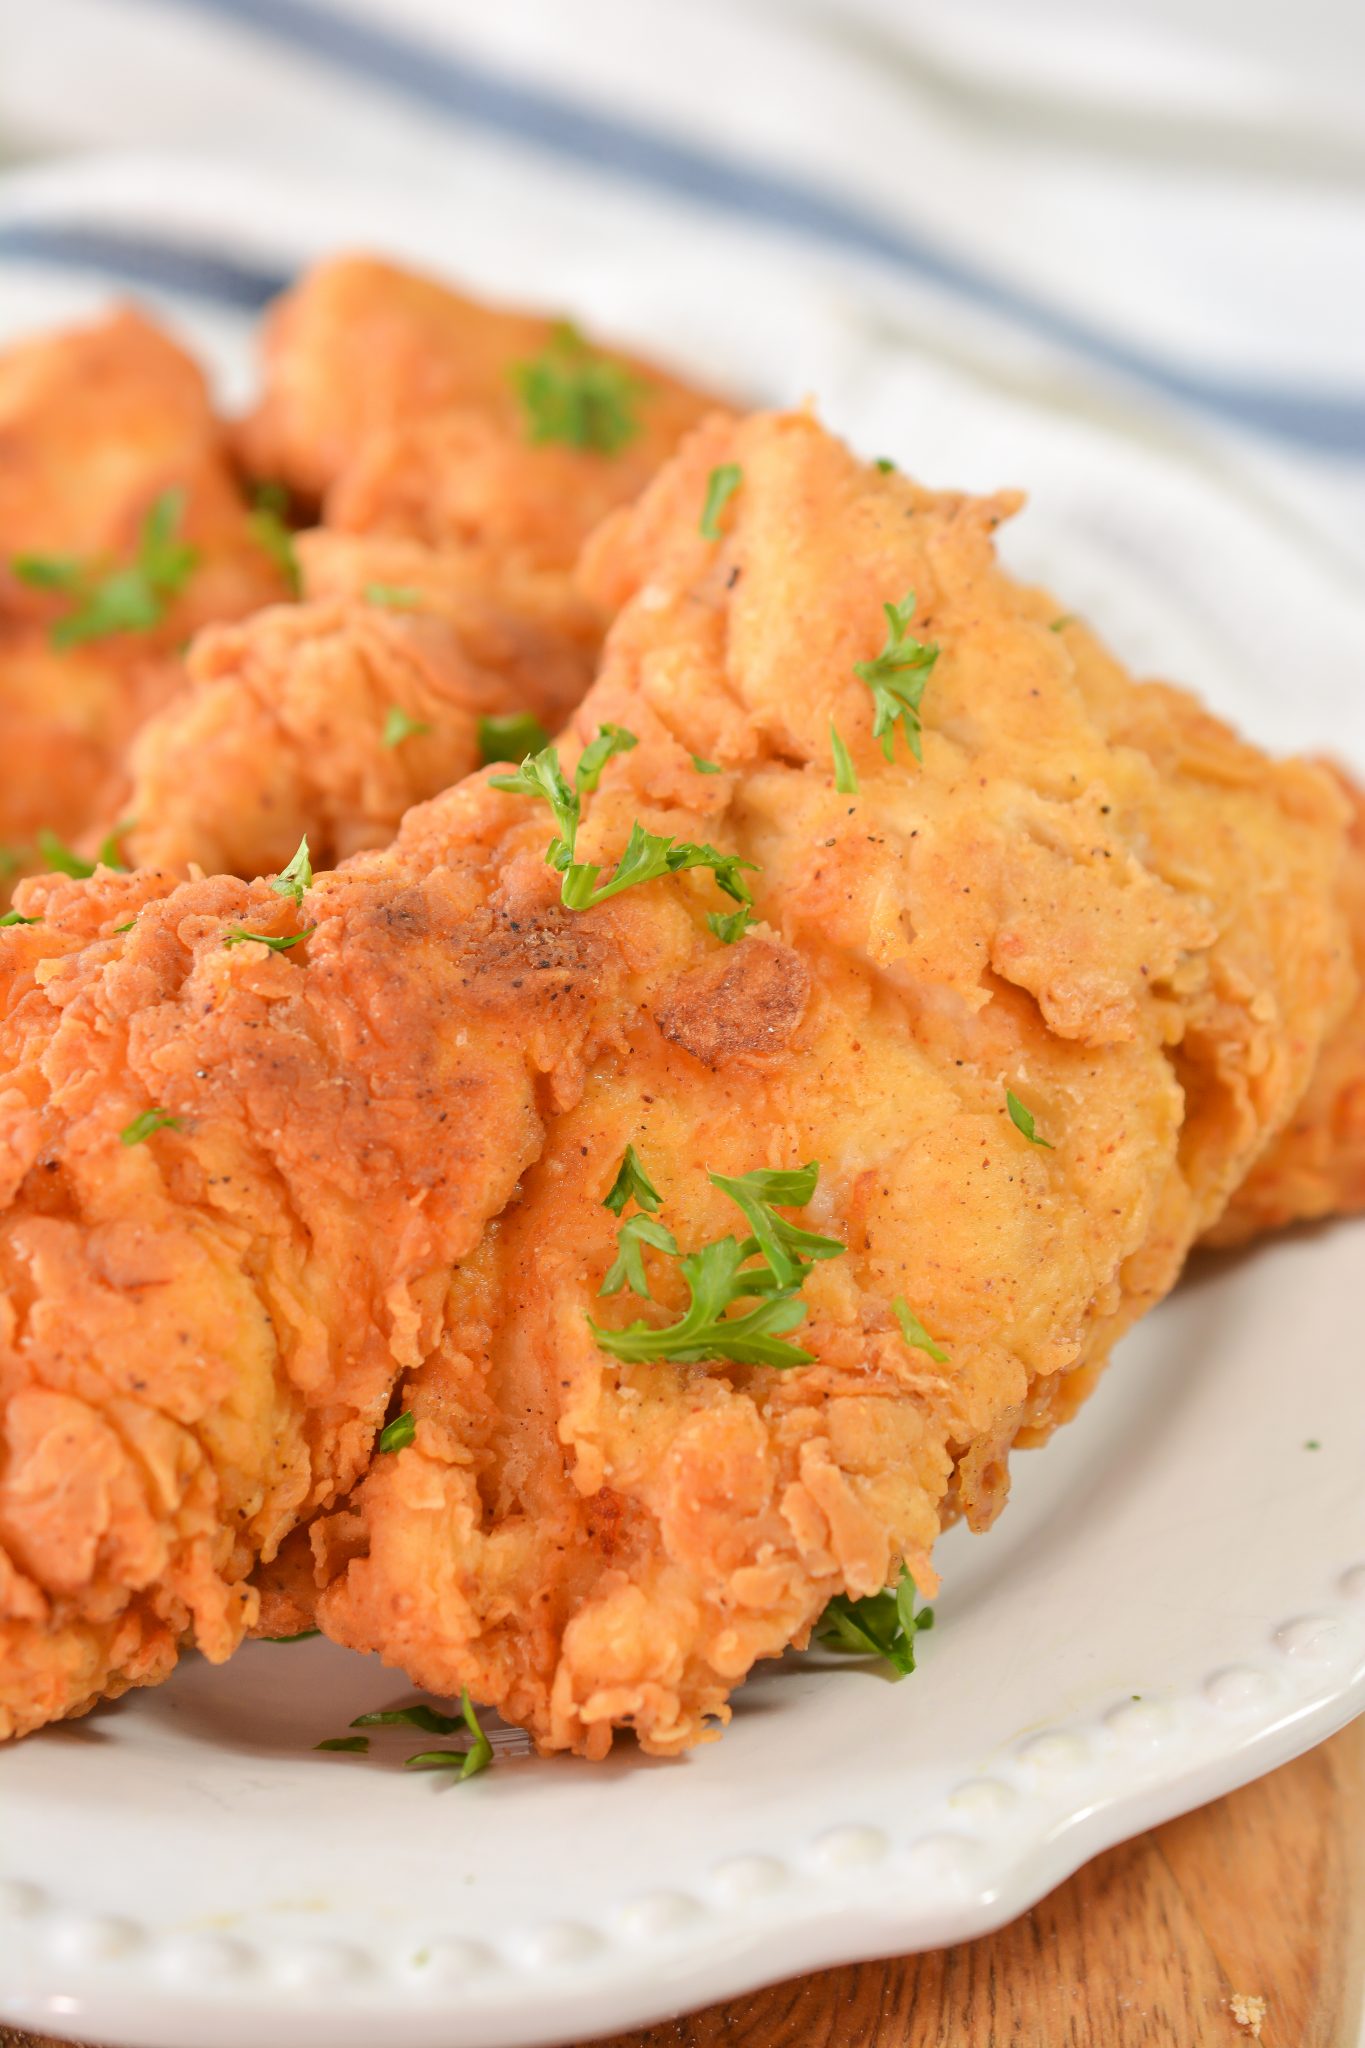 Best Southern Fried Chicken Batter - Sweet Pea's Kitchen